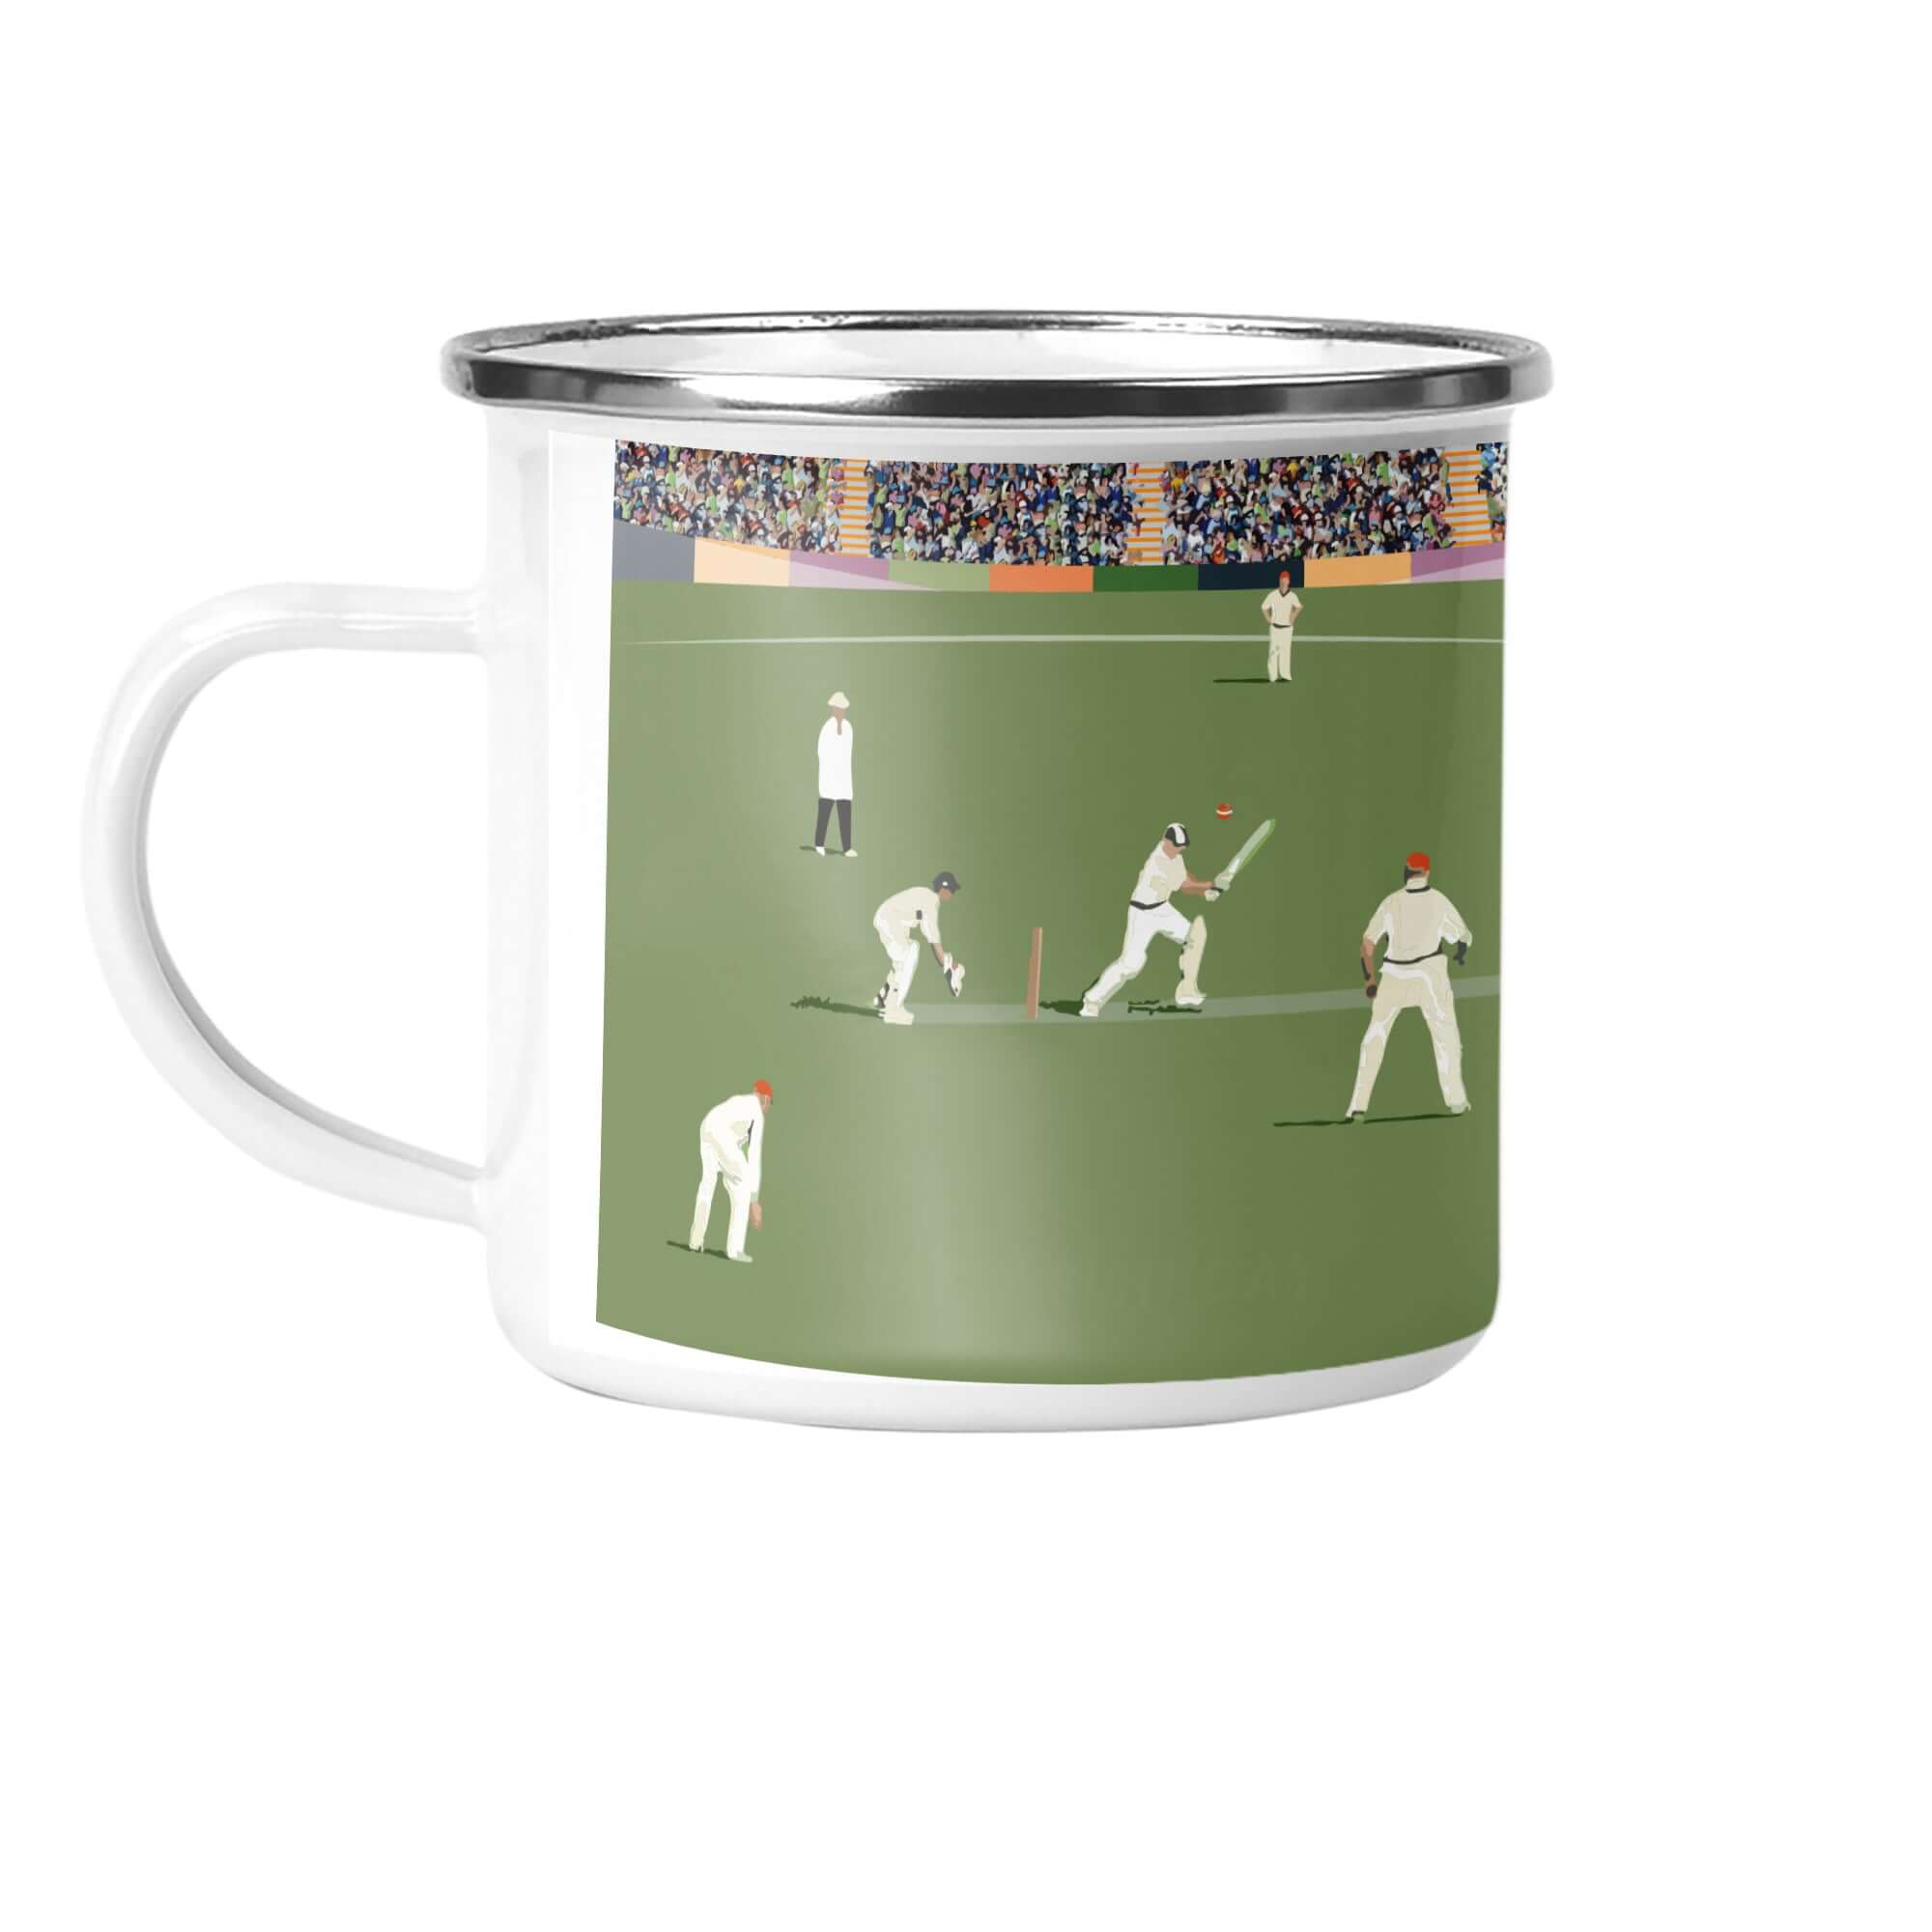 Cricket "The Test" Enamel Mug